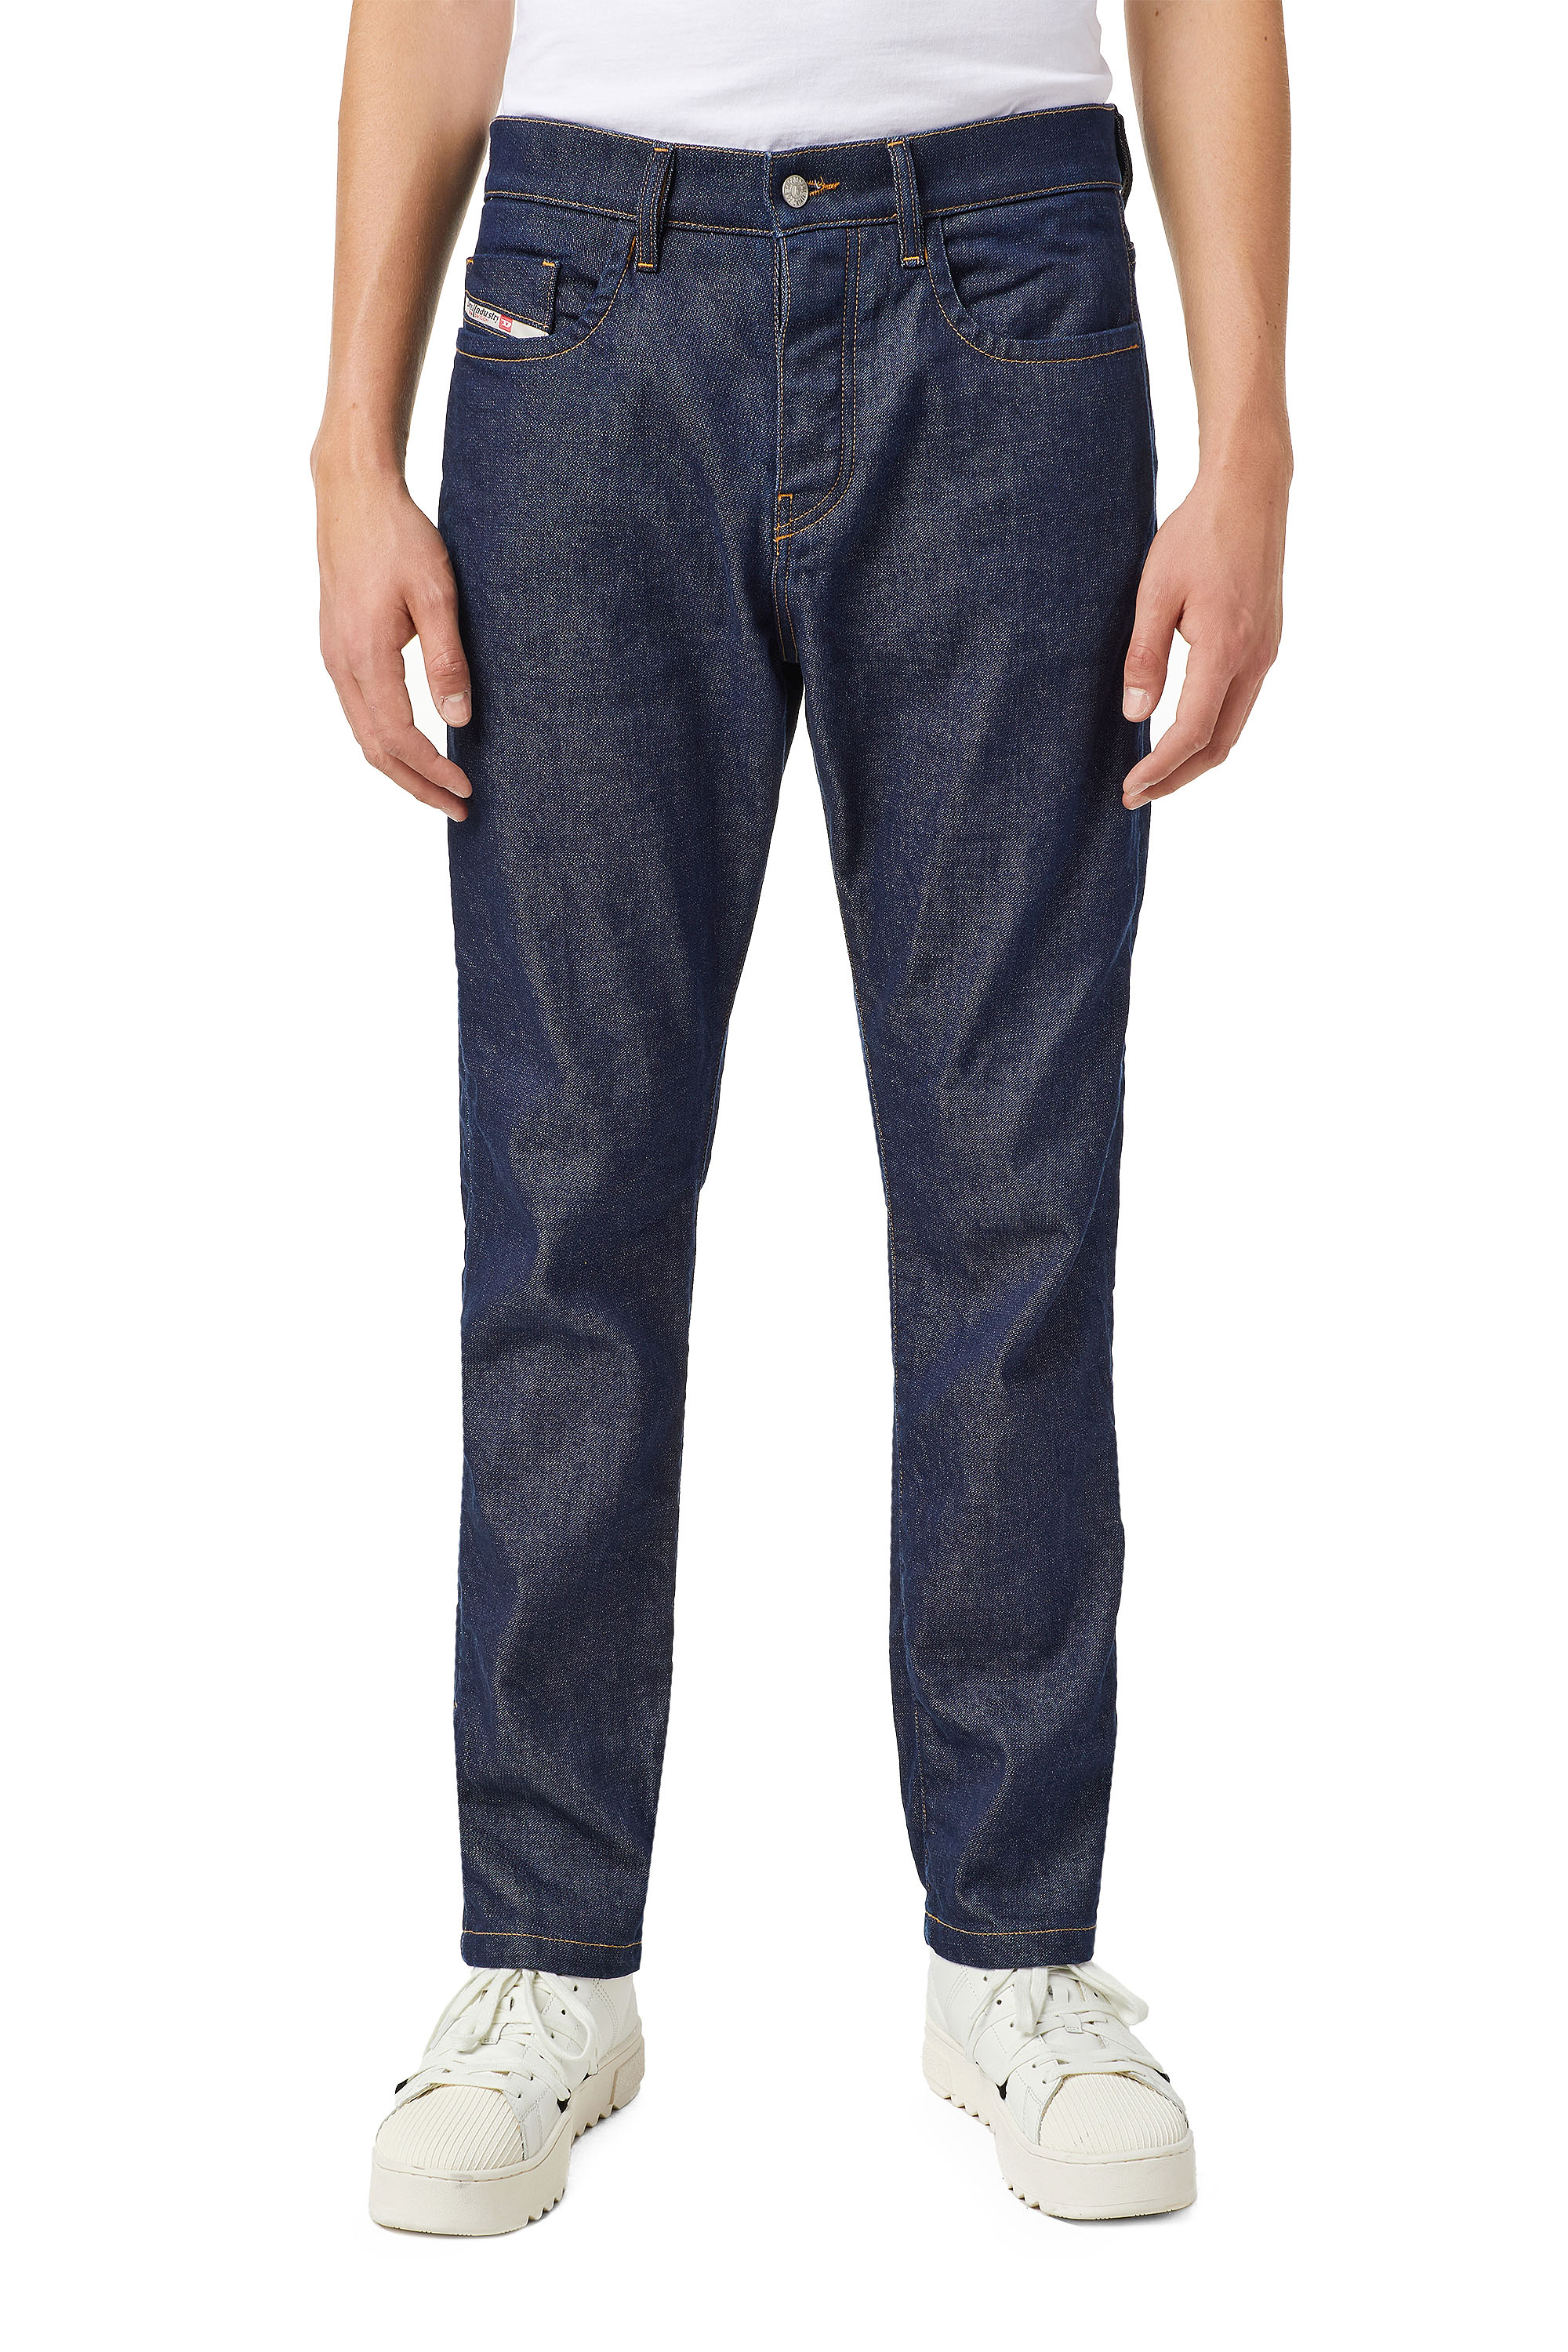 2020 D-VIKER 09B28 Straight Jeans, ダークブルー - Jeans